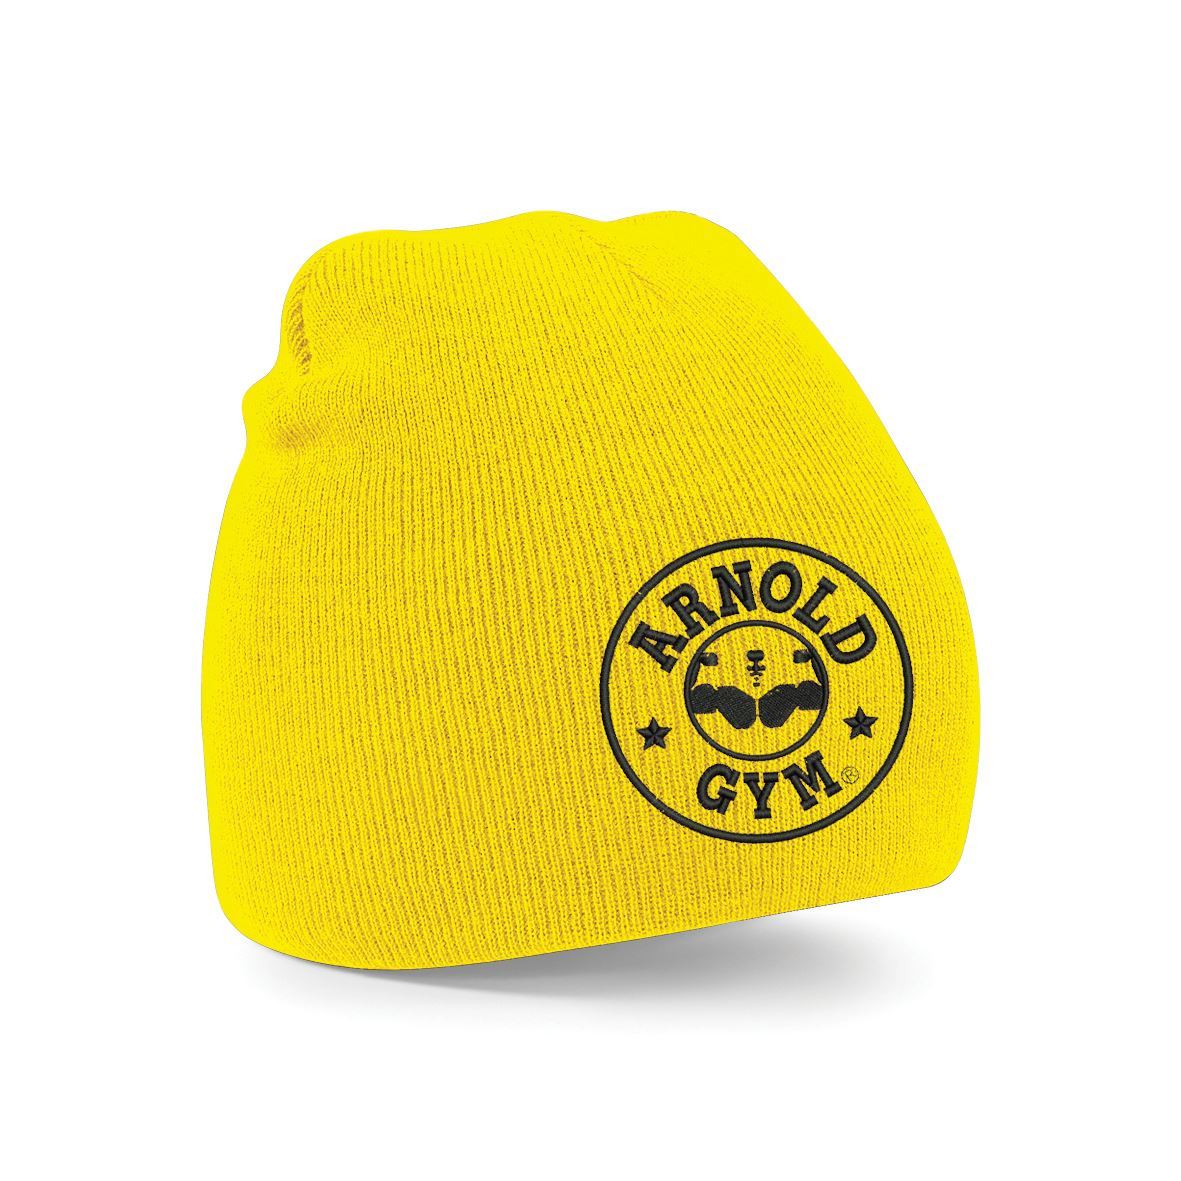 Arnold Gym Knit Sport Beanie Black 2 Tone Grey Yellow Hat Cap One Size 